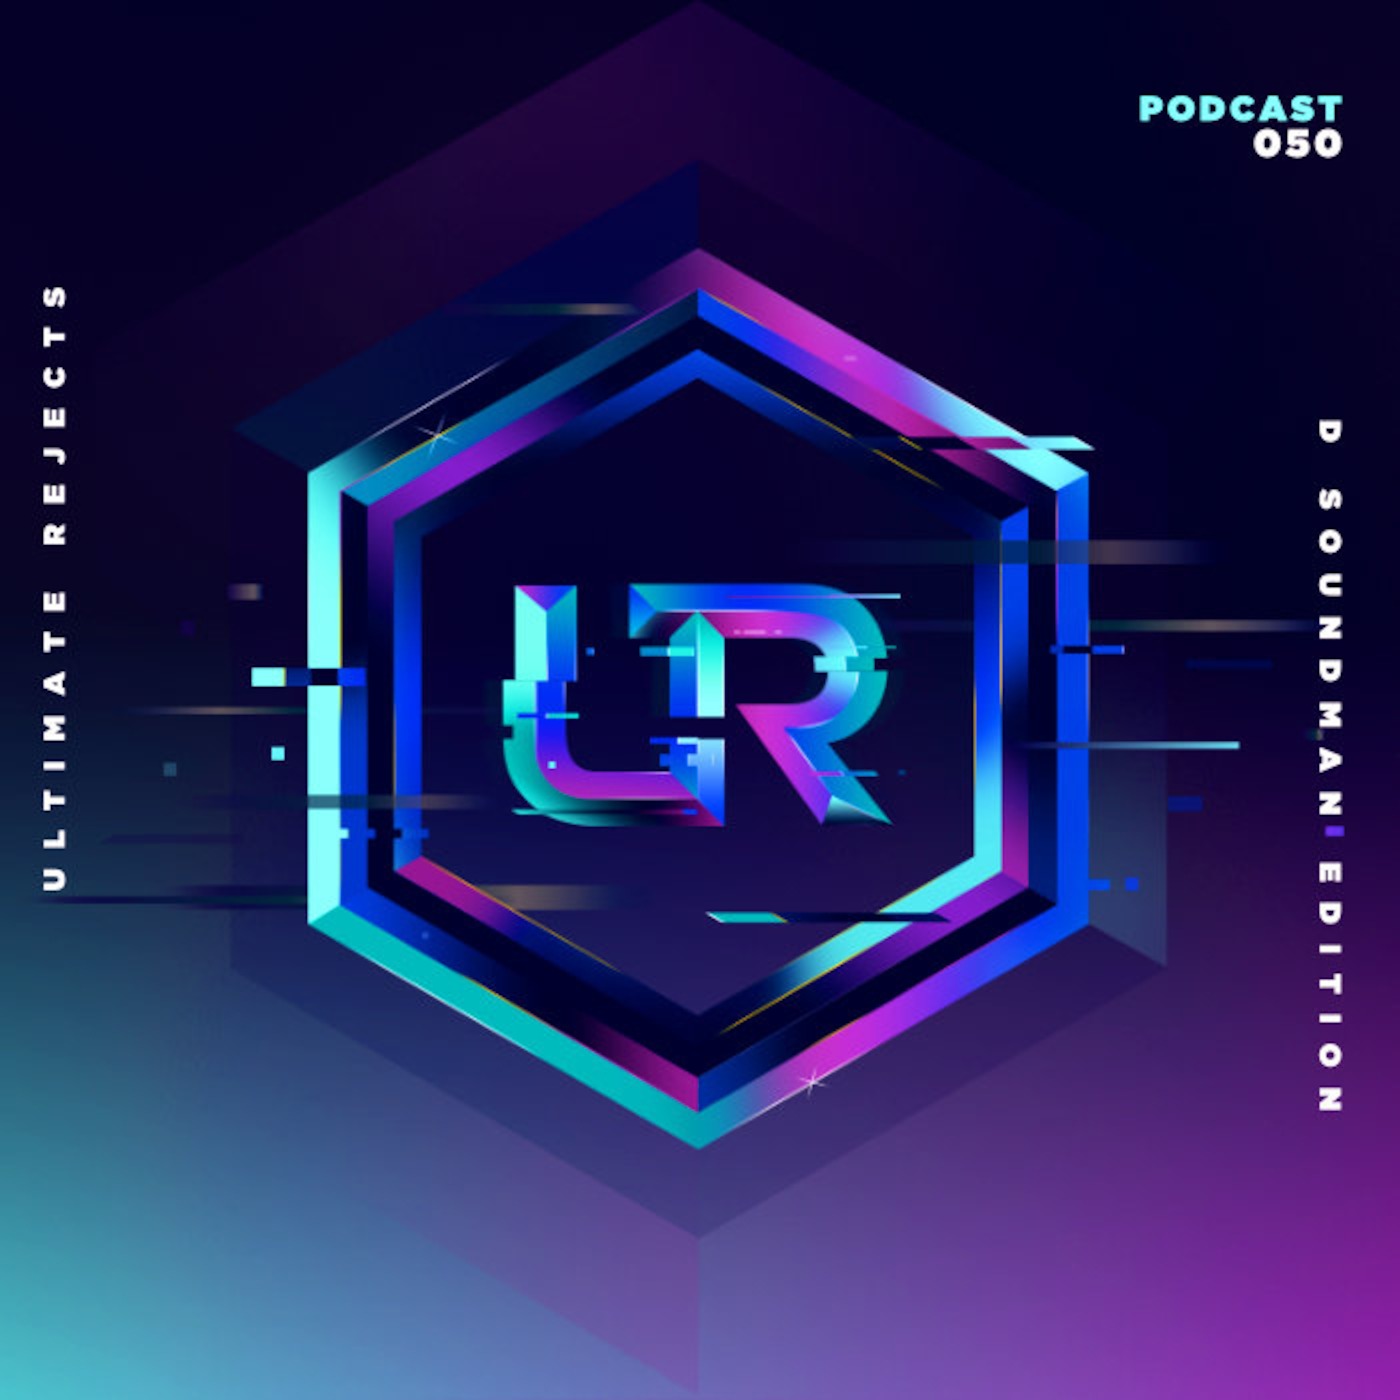 Ultimate Rejects UR Podcast 050 (D Soundman Edition)